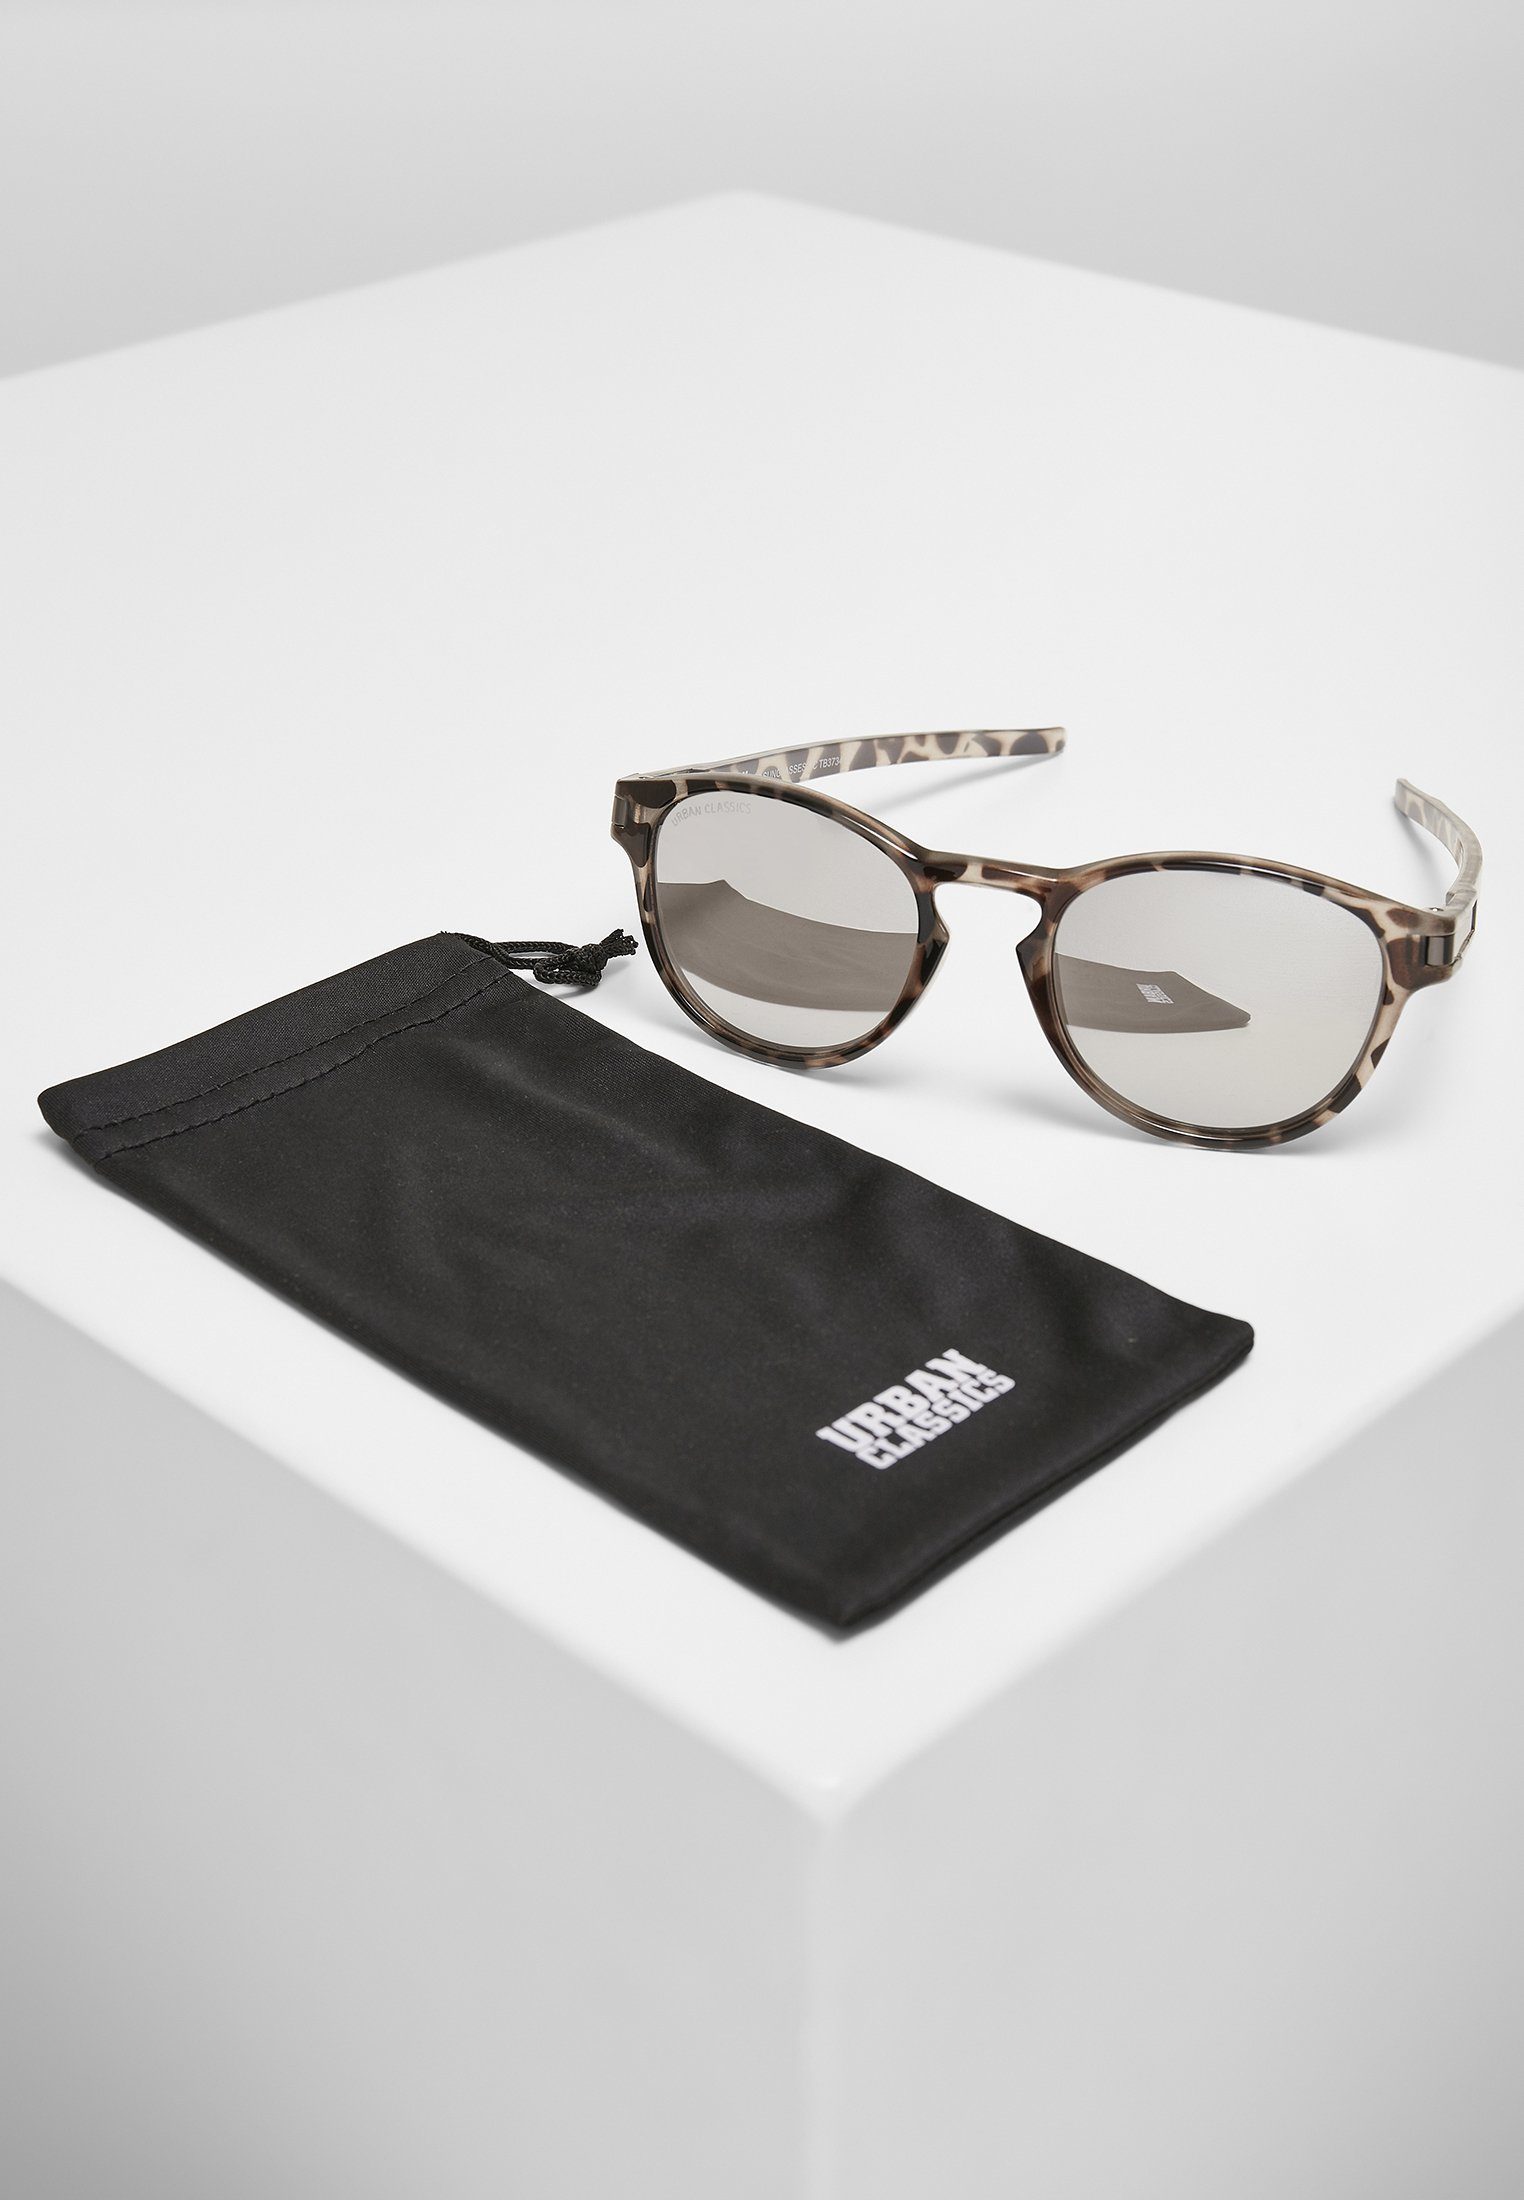 Accessoires URBAN grey UC leo/silver 106 CLASSICS Sonnenbrille Sunglasses